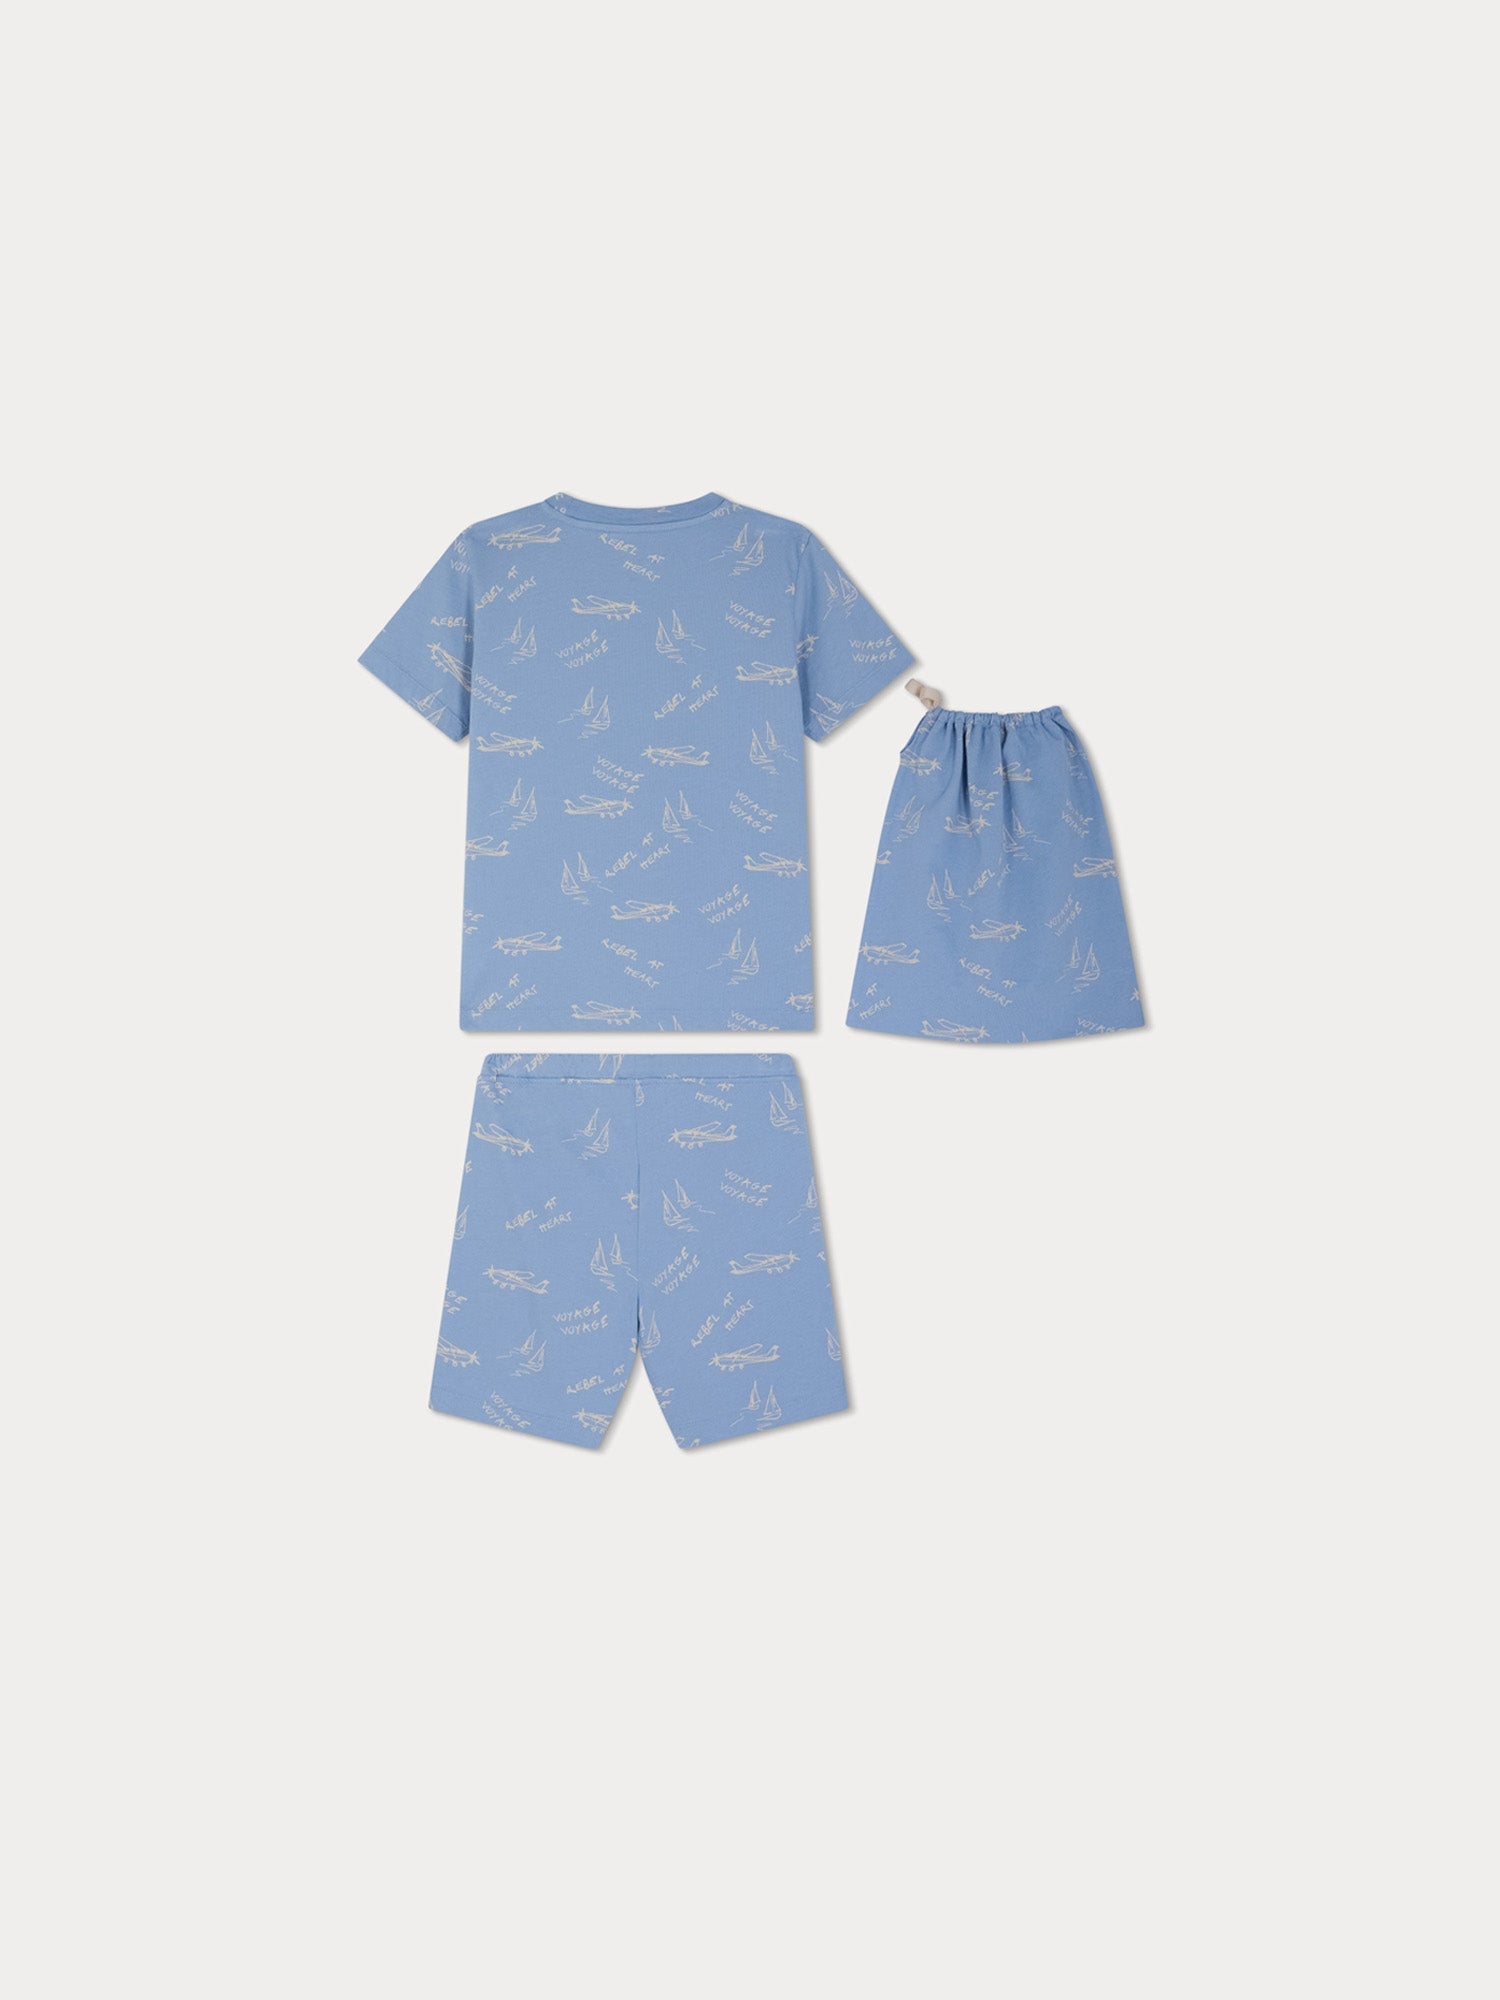 Boys Blue Printed Cotton Nightwear Set